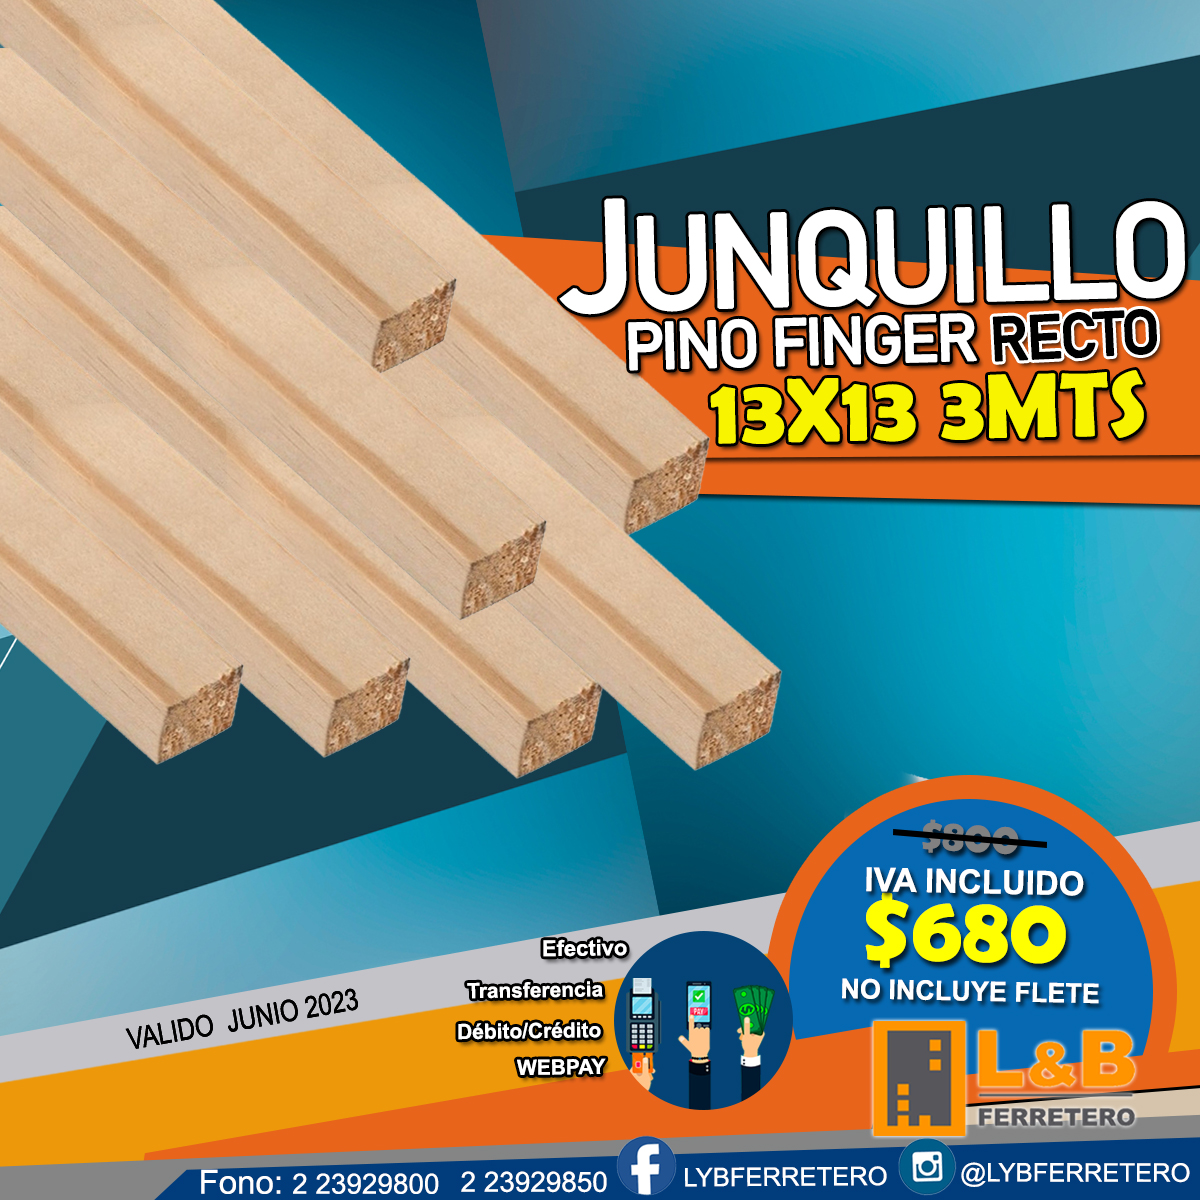 Junquillo Recto Pino Finger  13x13 3mts